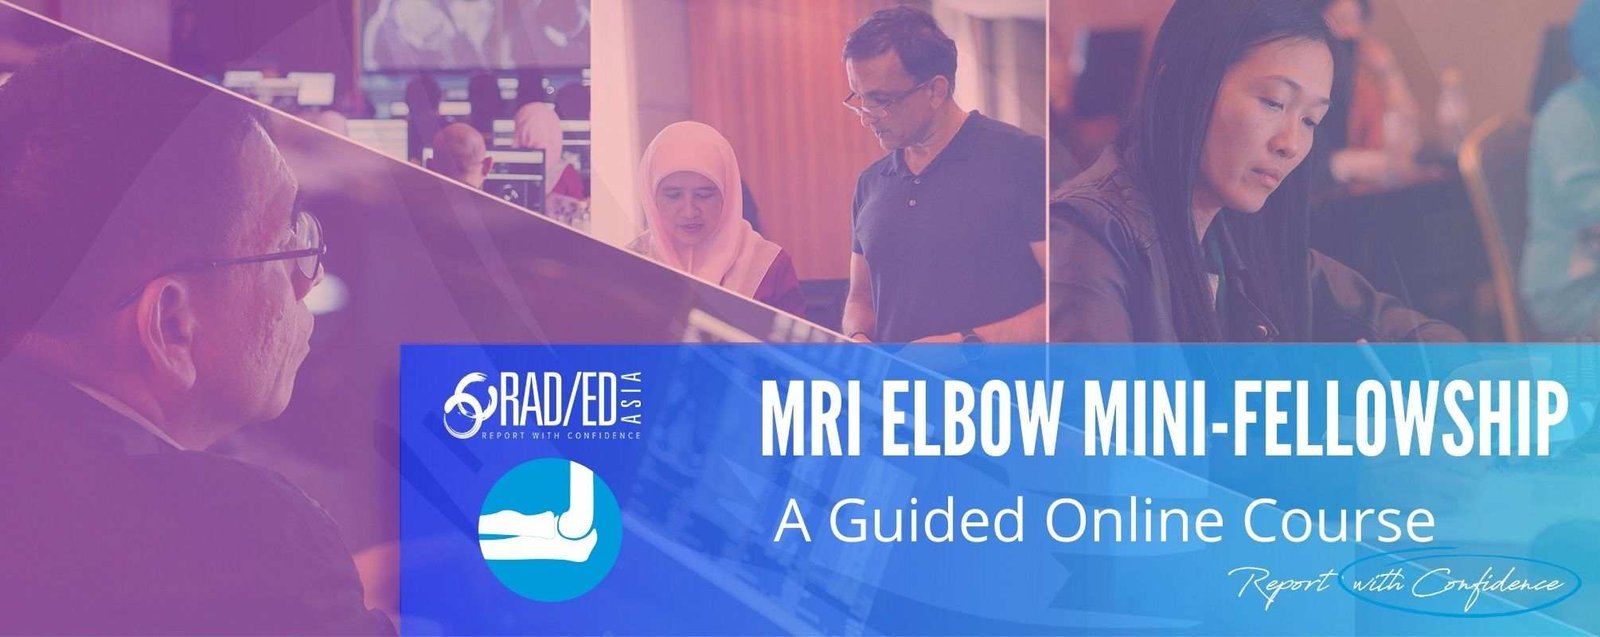 learn-elbow-imaging-mri-radiology-online-course-radedasia